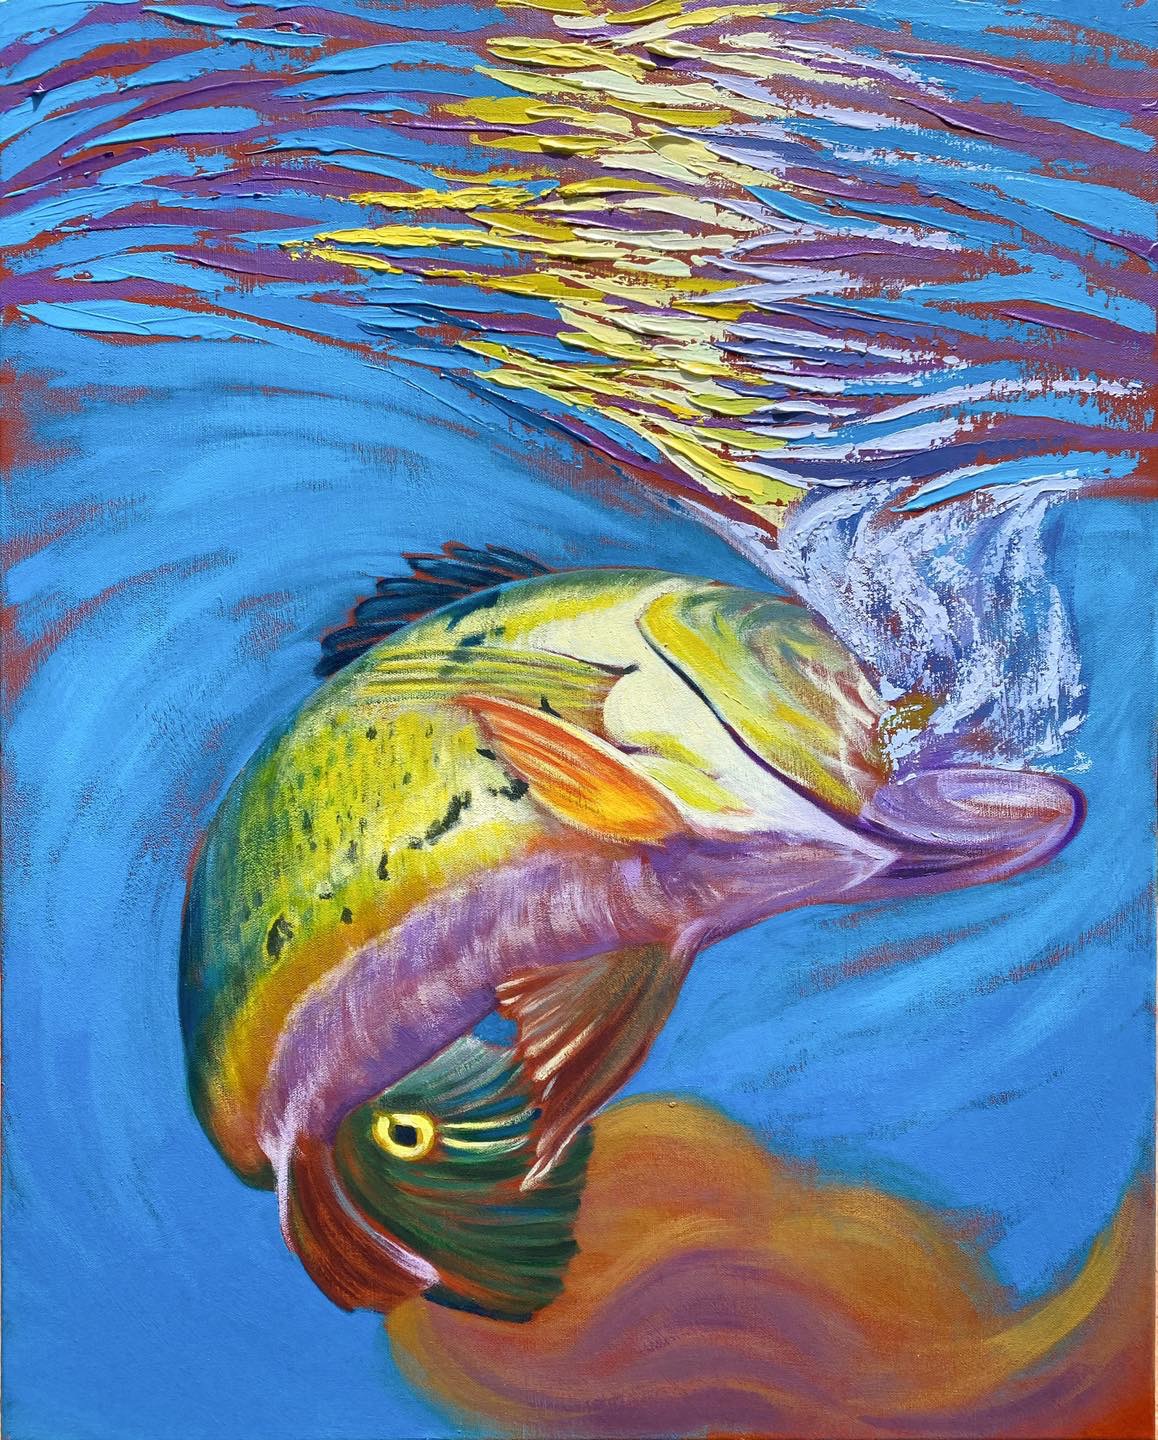 Peacock Bass, Acrylic by Amy-Lauren Lum Won - Kauai fish art, Hawaii fish paintings